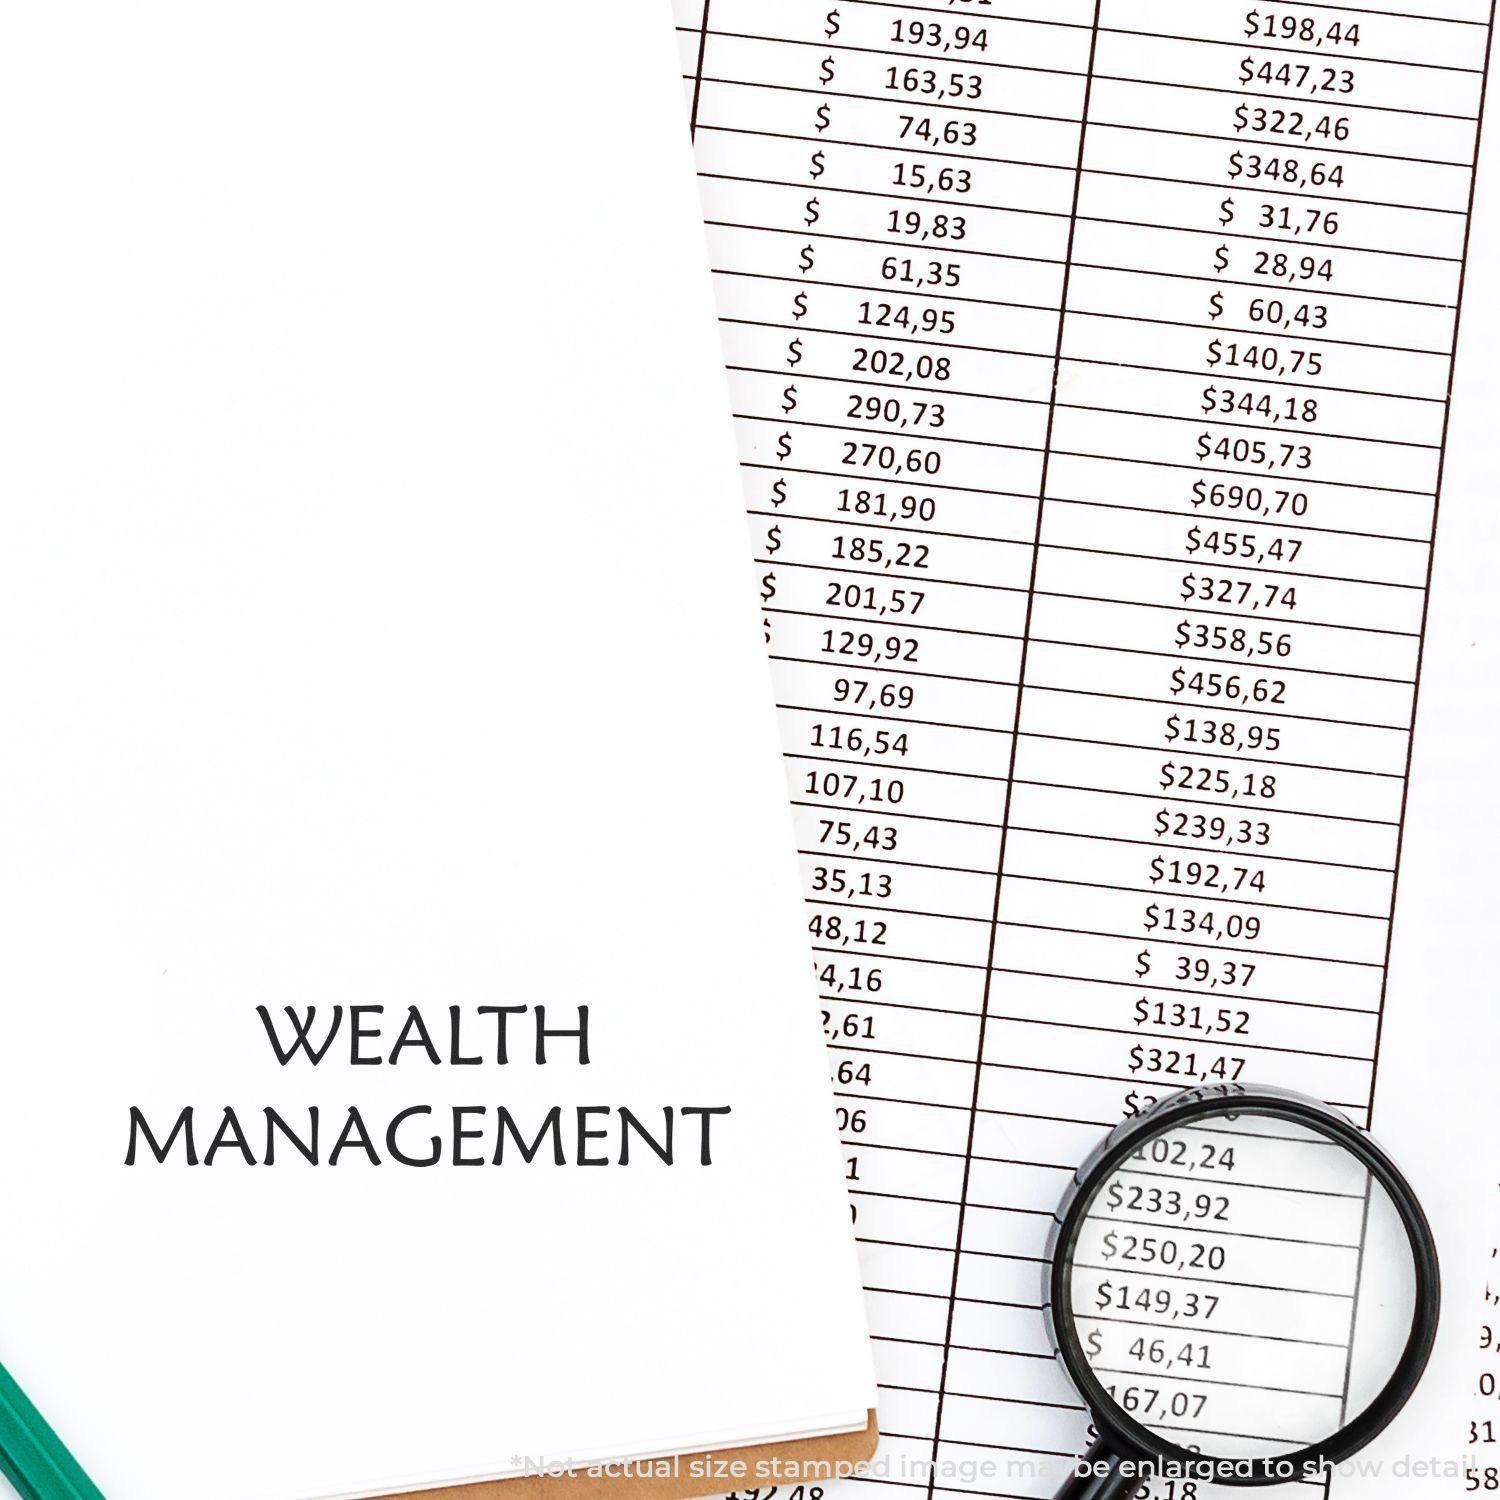 Large Pre Inked Wealth Management Stamp Main Image